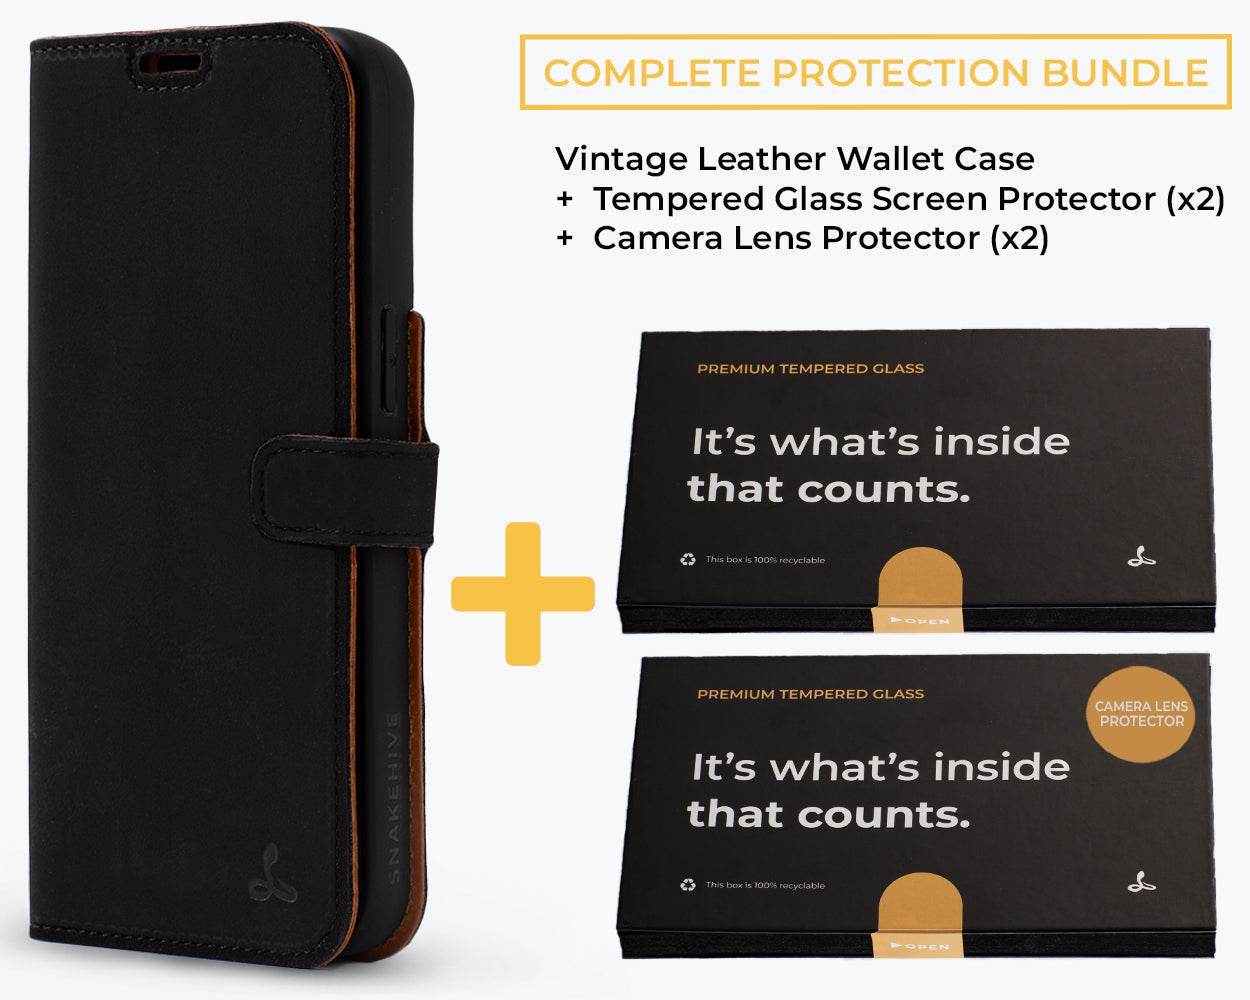 Complete Protection Bundle (Vintage Wallet) - Apple iPhone 12 Pro